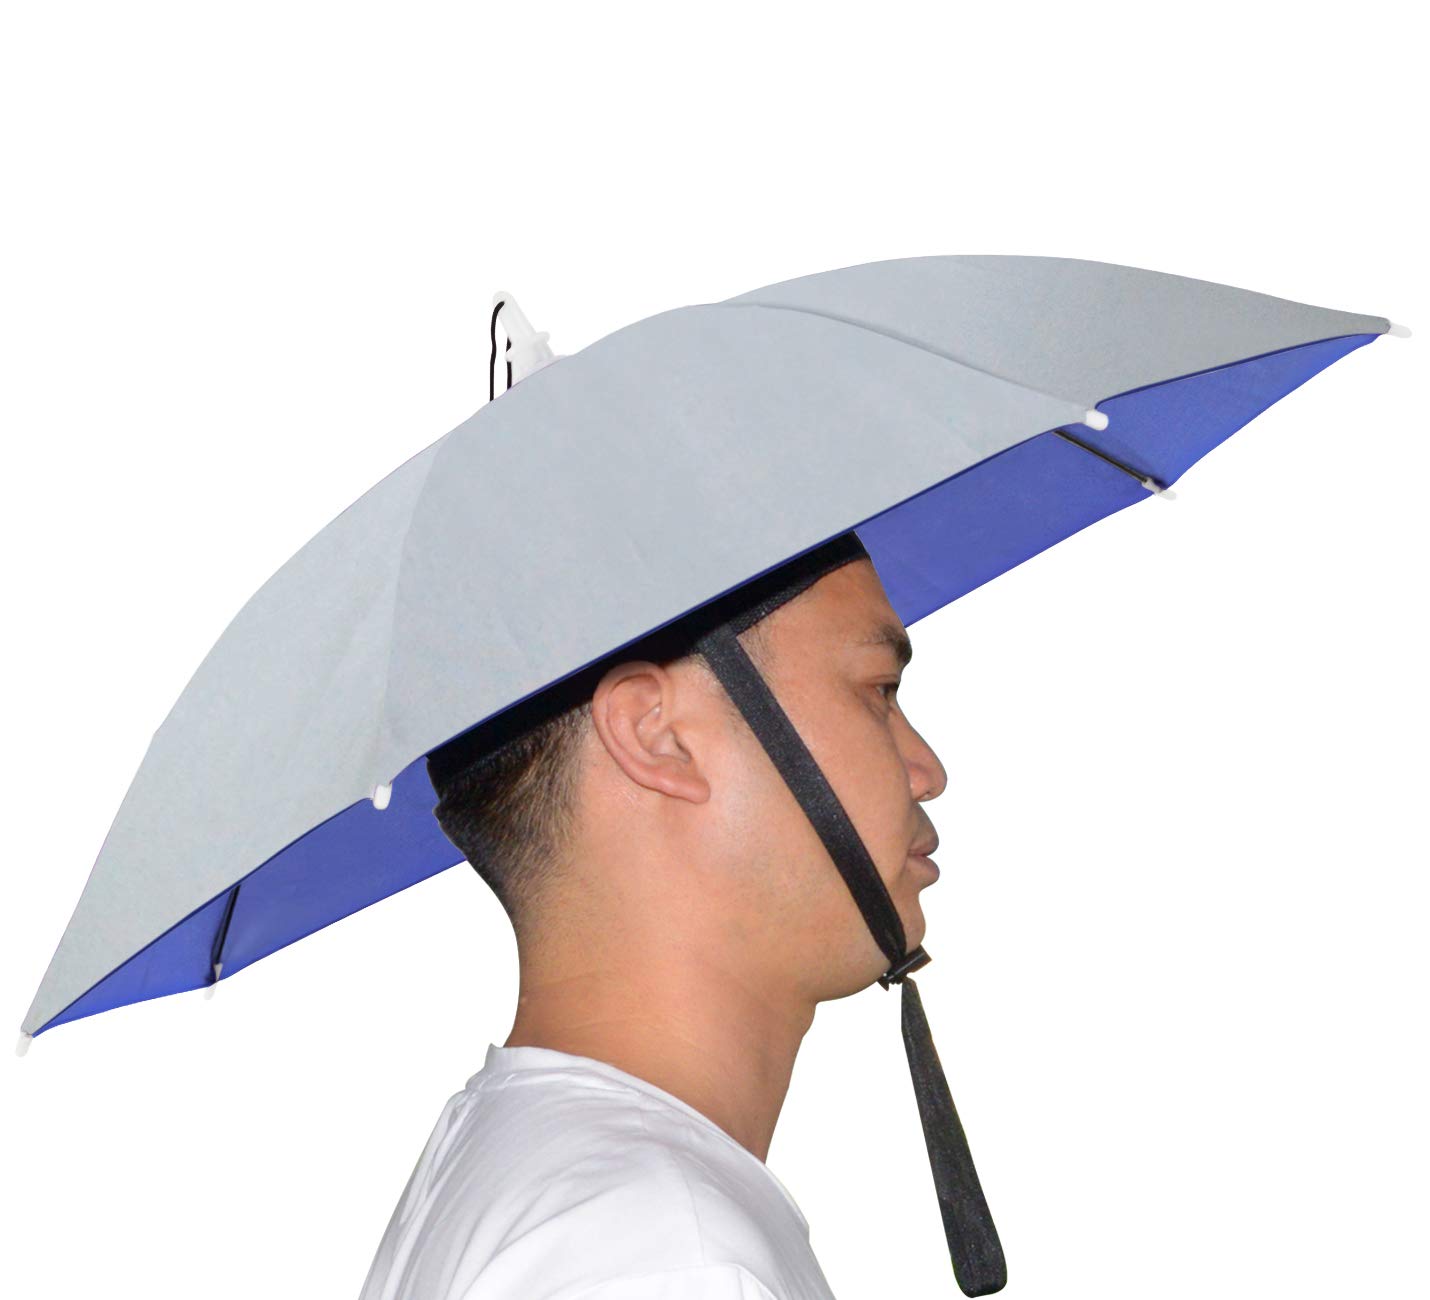  NEW-Vi Umbrella Hat Adult and Kids Folding Cap for